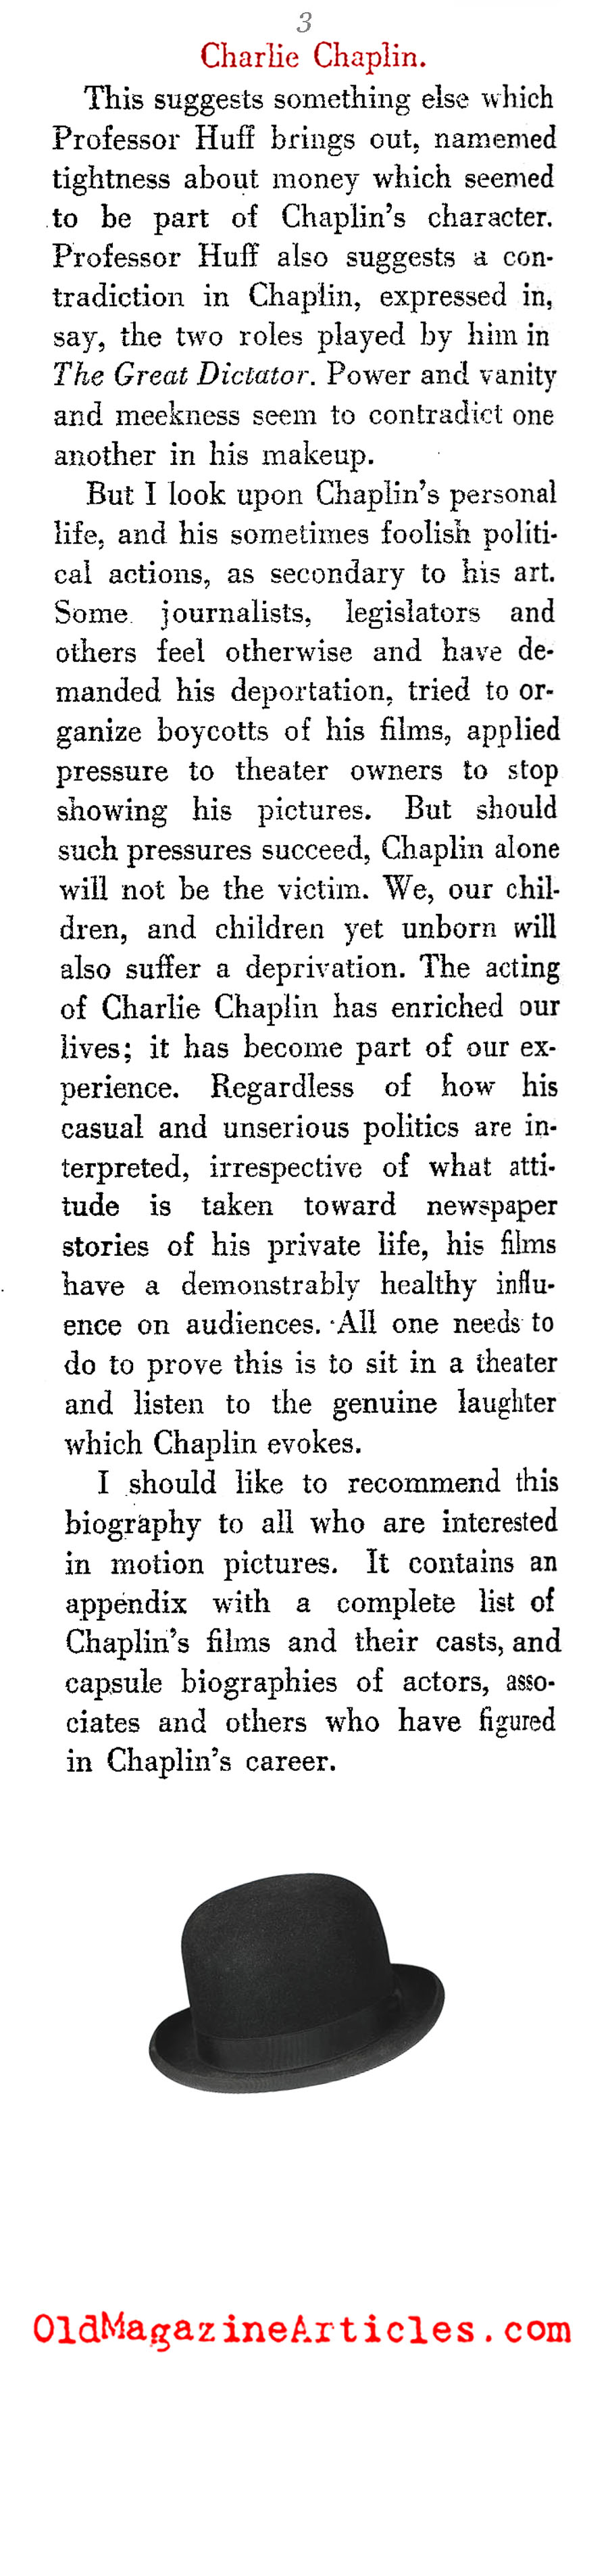 Charlie Chaplin Bio (New Leader Magazine, 1951)